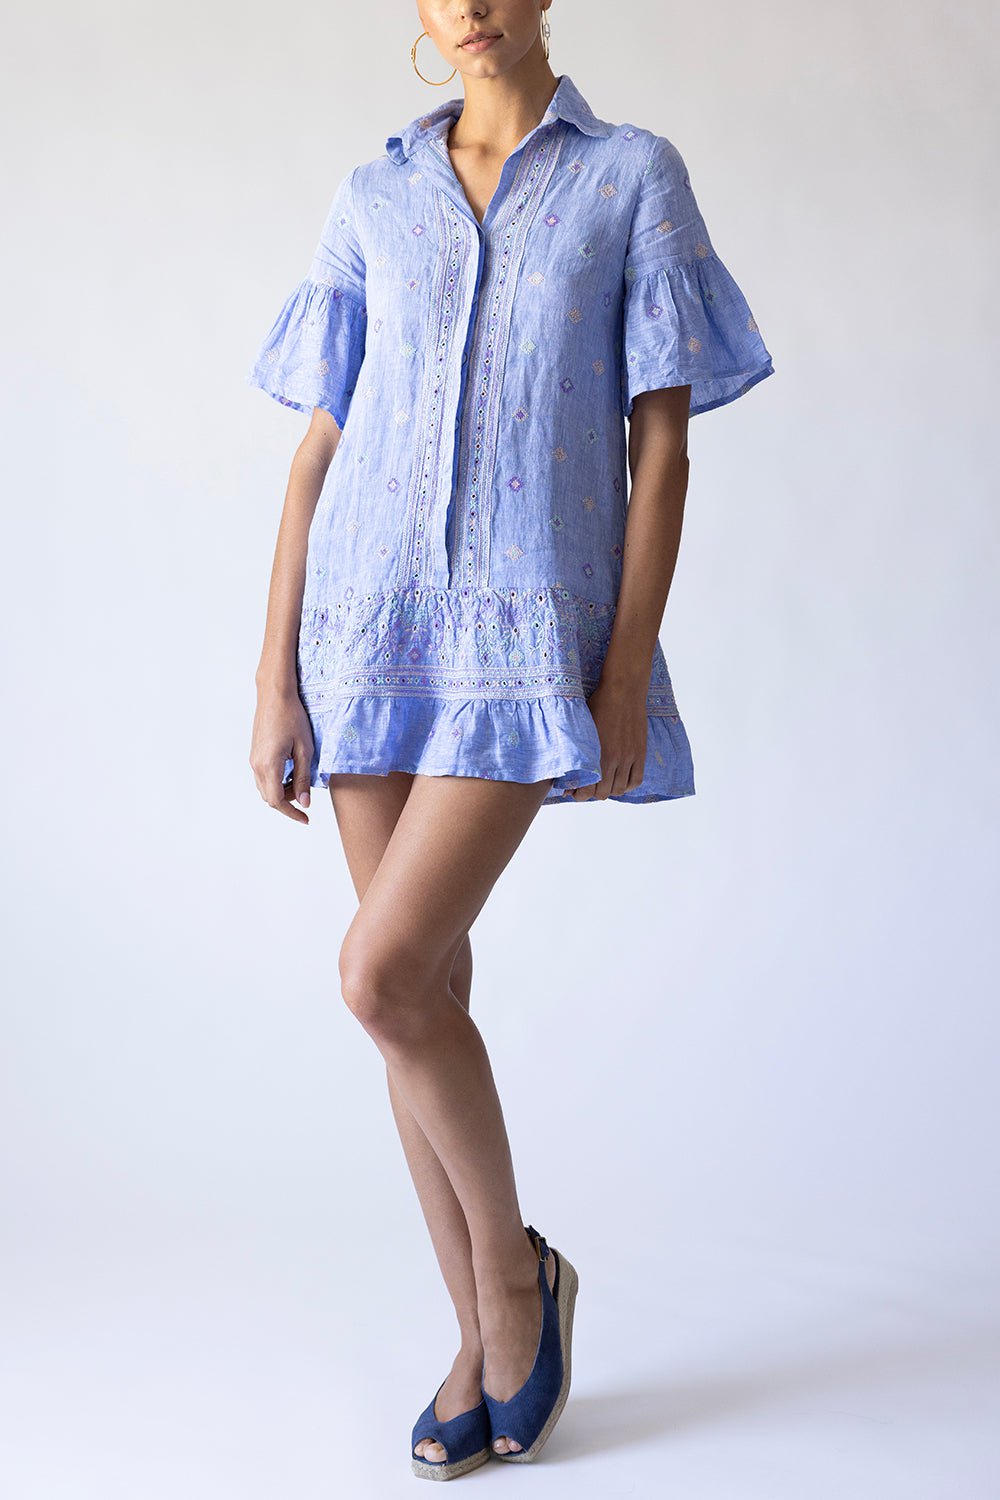 TEMPTATION POSITANO-Embroidered Button Shirt Dress-